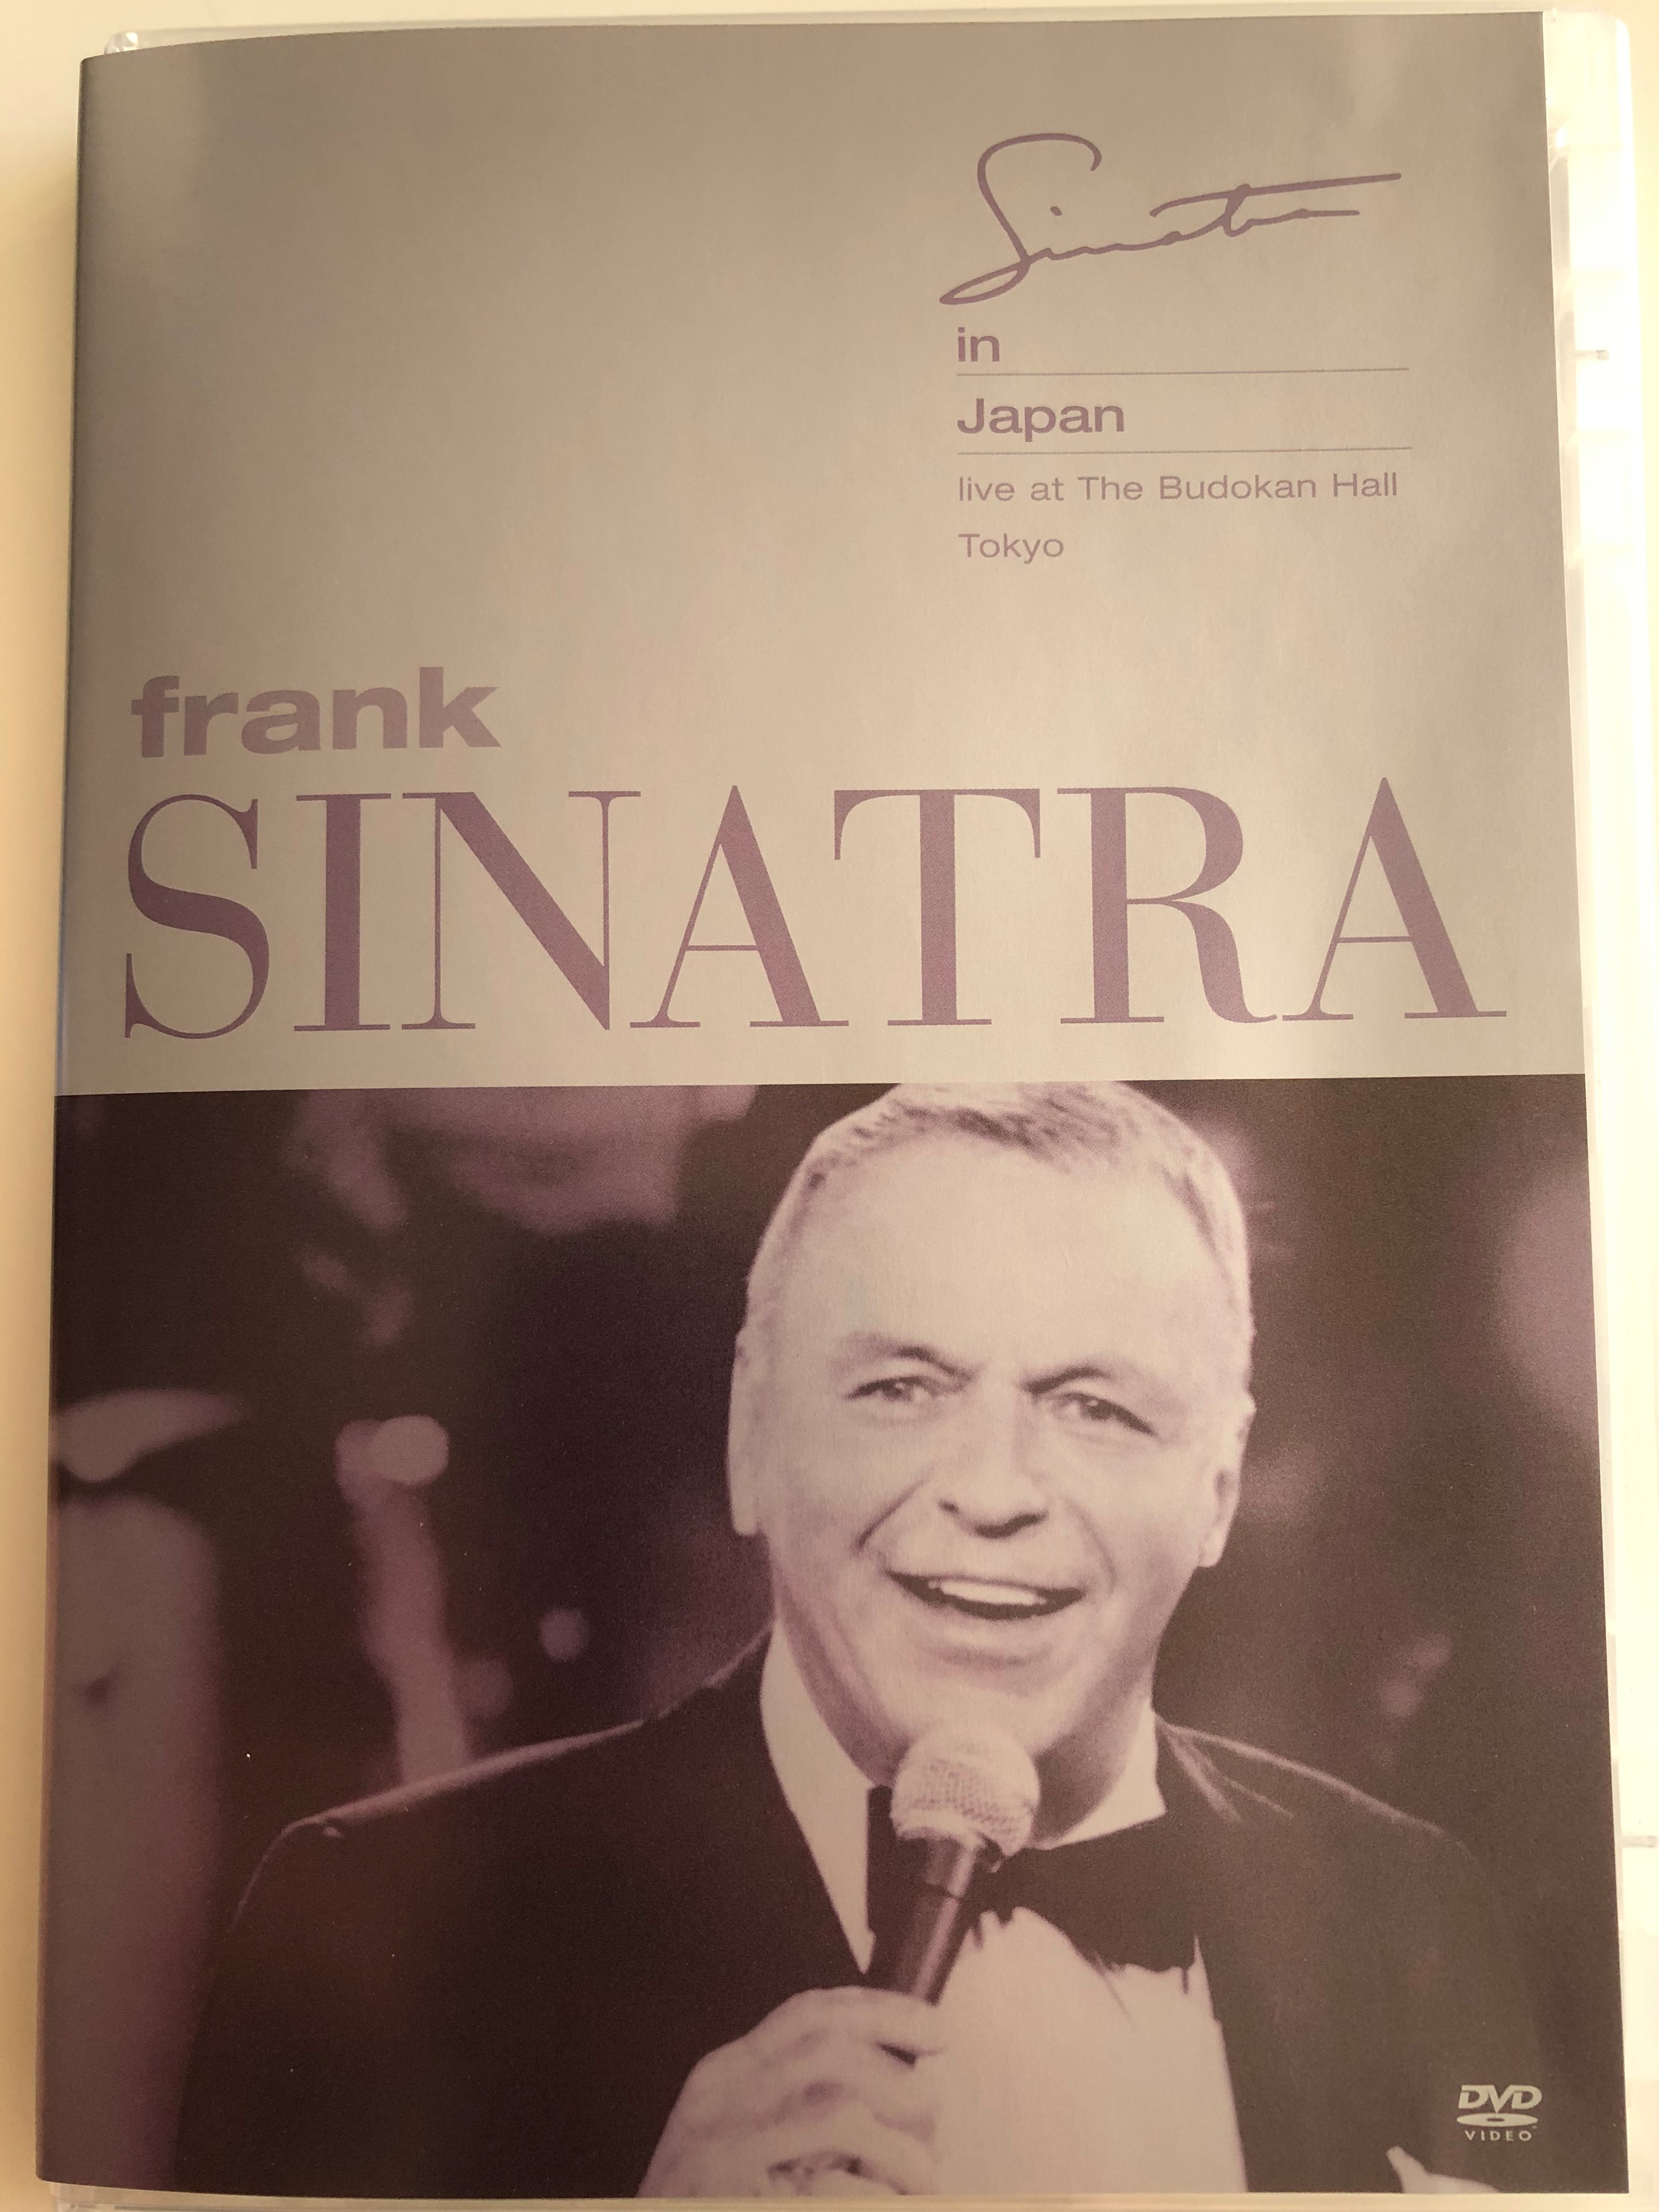 frank-sinatra-in-japan-dvd-1985-live-at-the-budokan-hall-1.jpg